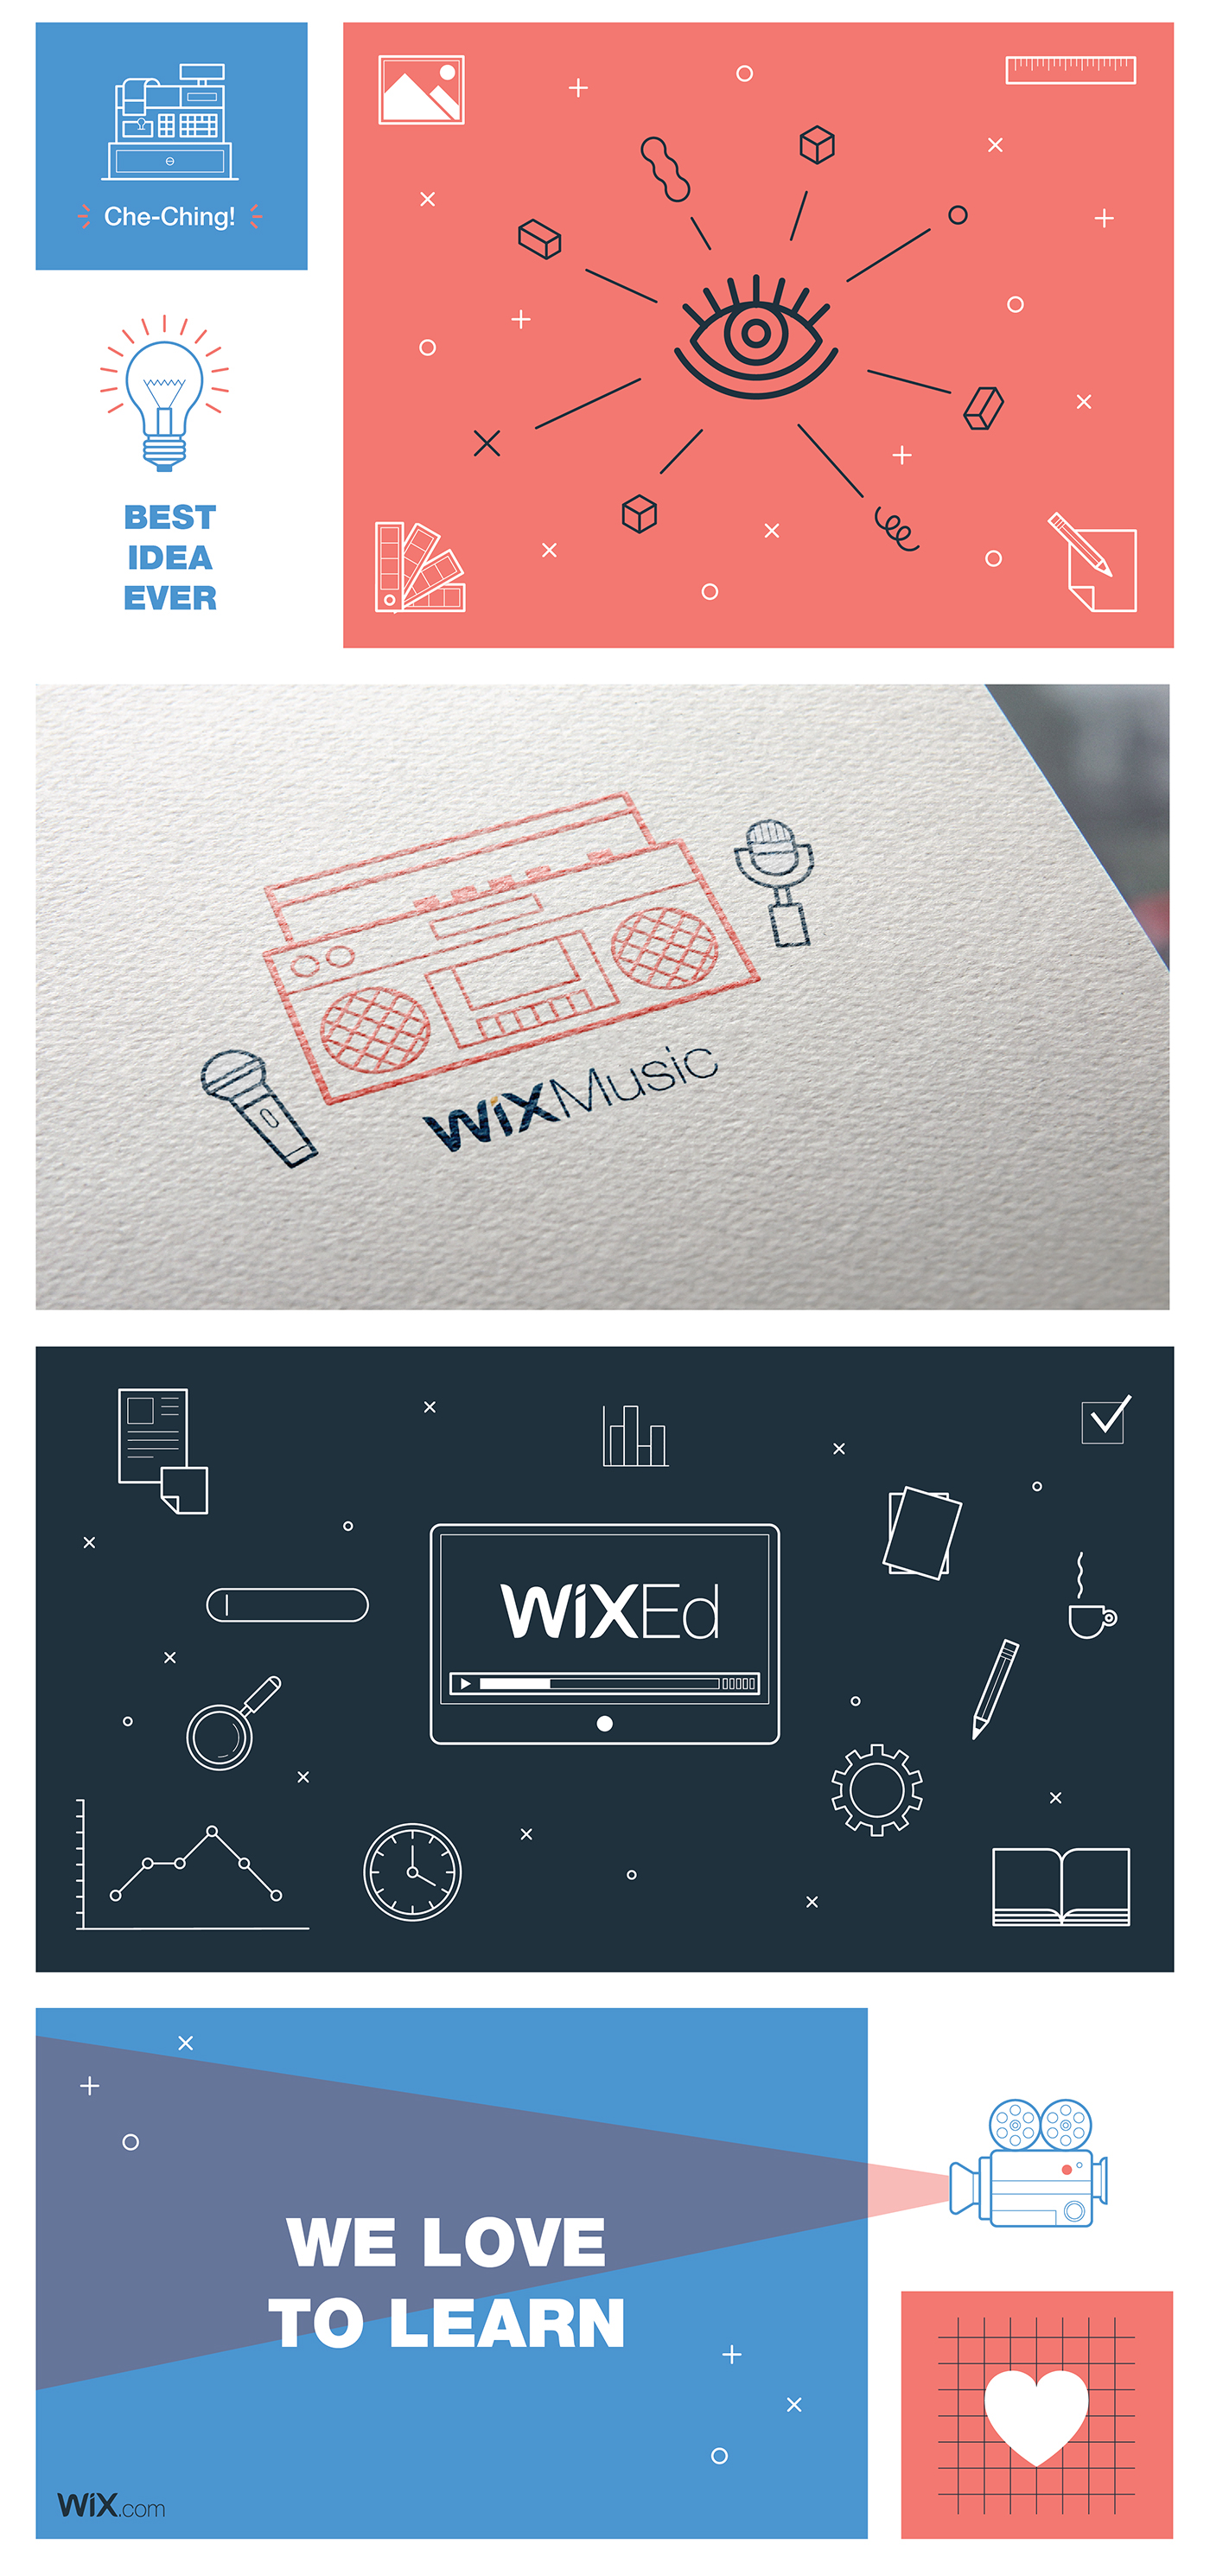 wixed wix studio wix.com